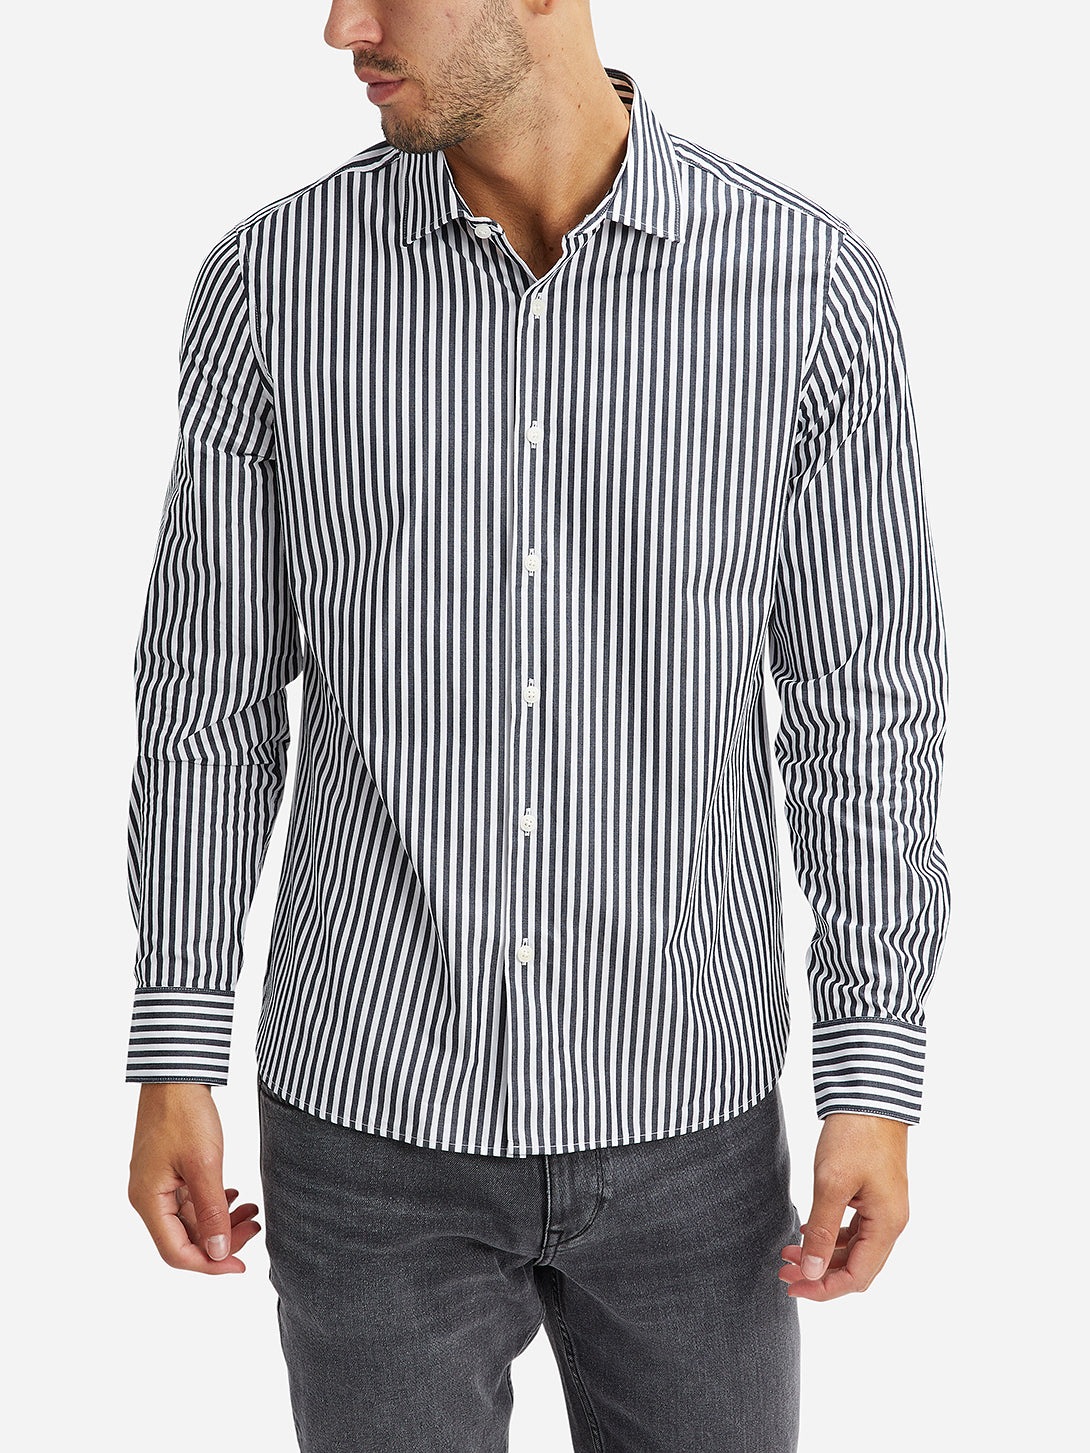 Black and White Stripe Adrian Shirt Mens O.N.S FW22